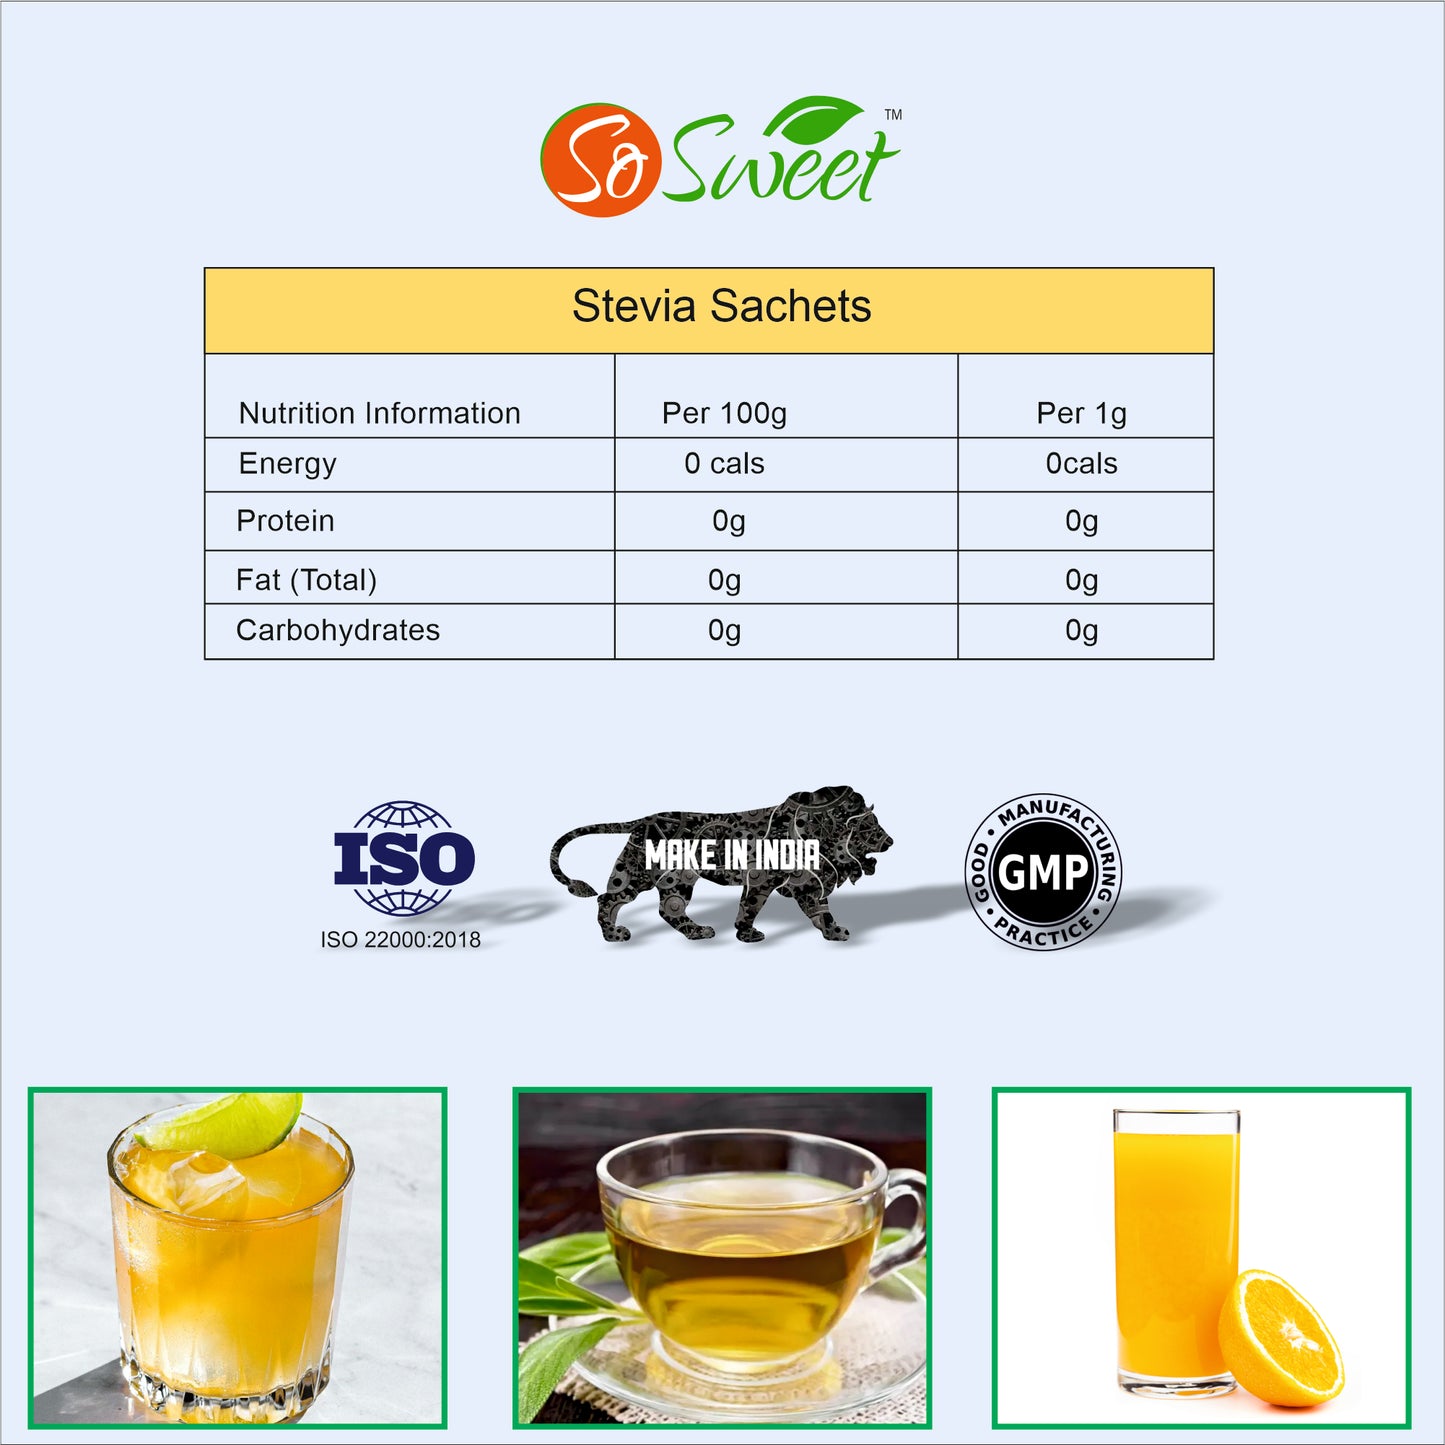 So Sweet Stevia Sachets Sugar Free Natural Low Calorie Sweetener 120 Sachets